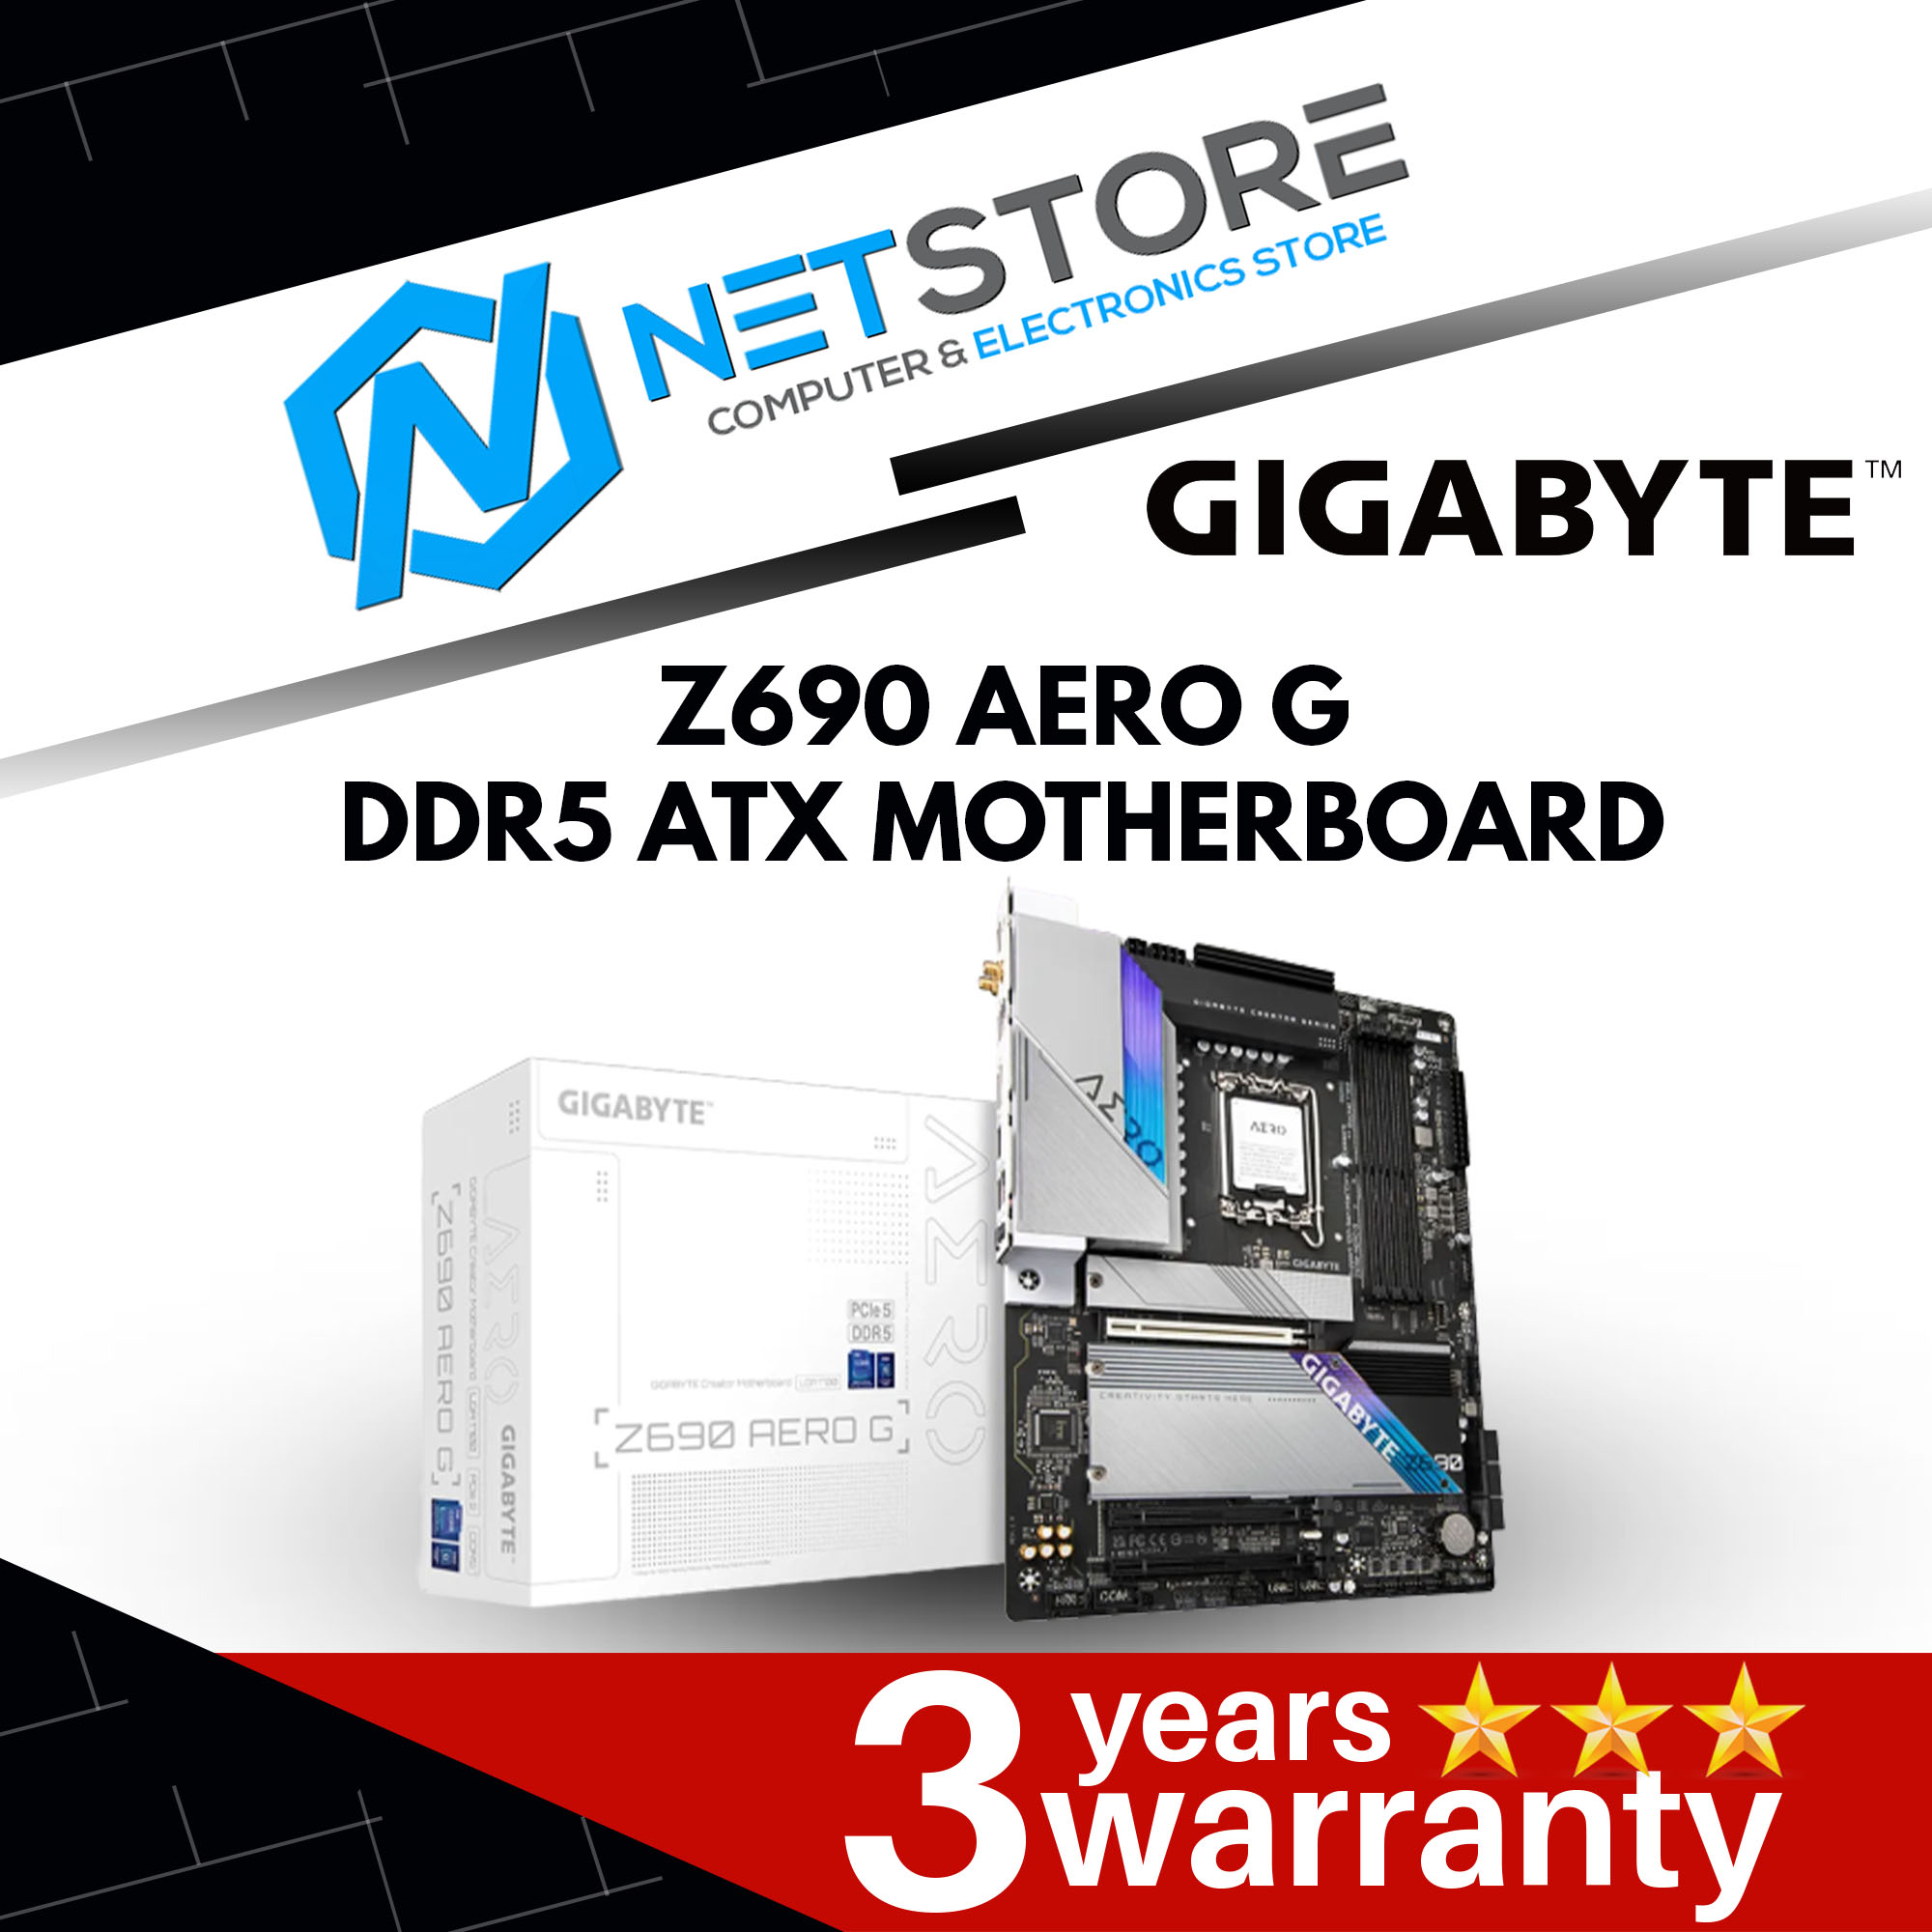 GIGABYTE Z690 AERO G DDR5 ATX MOTHERBOARD